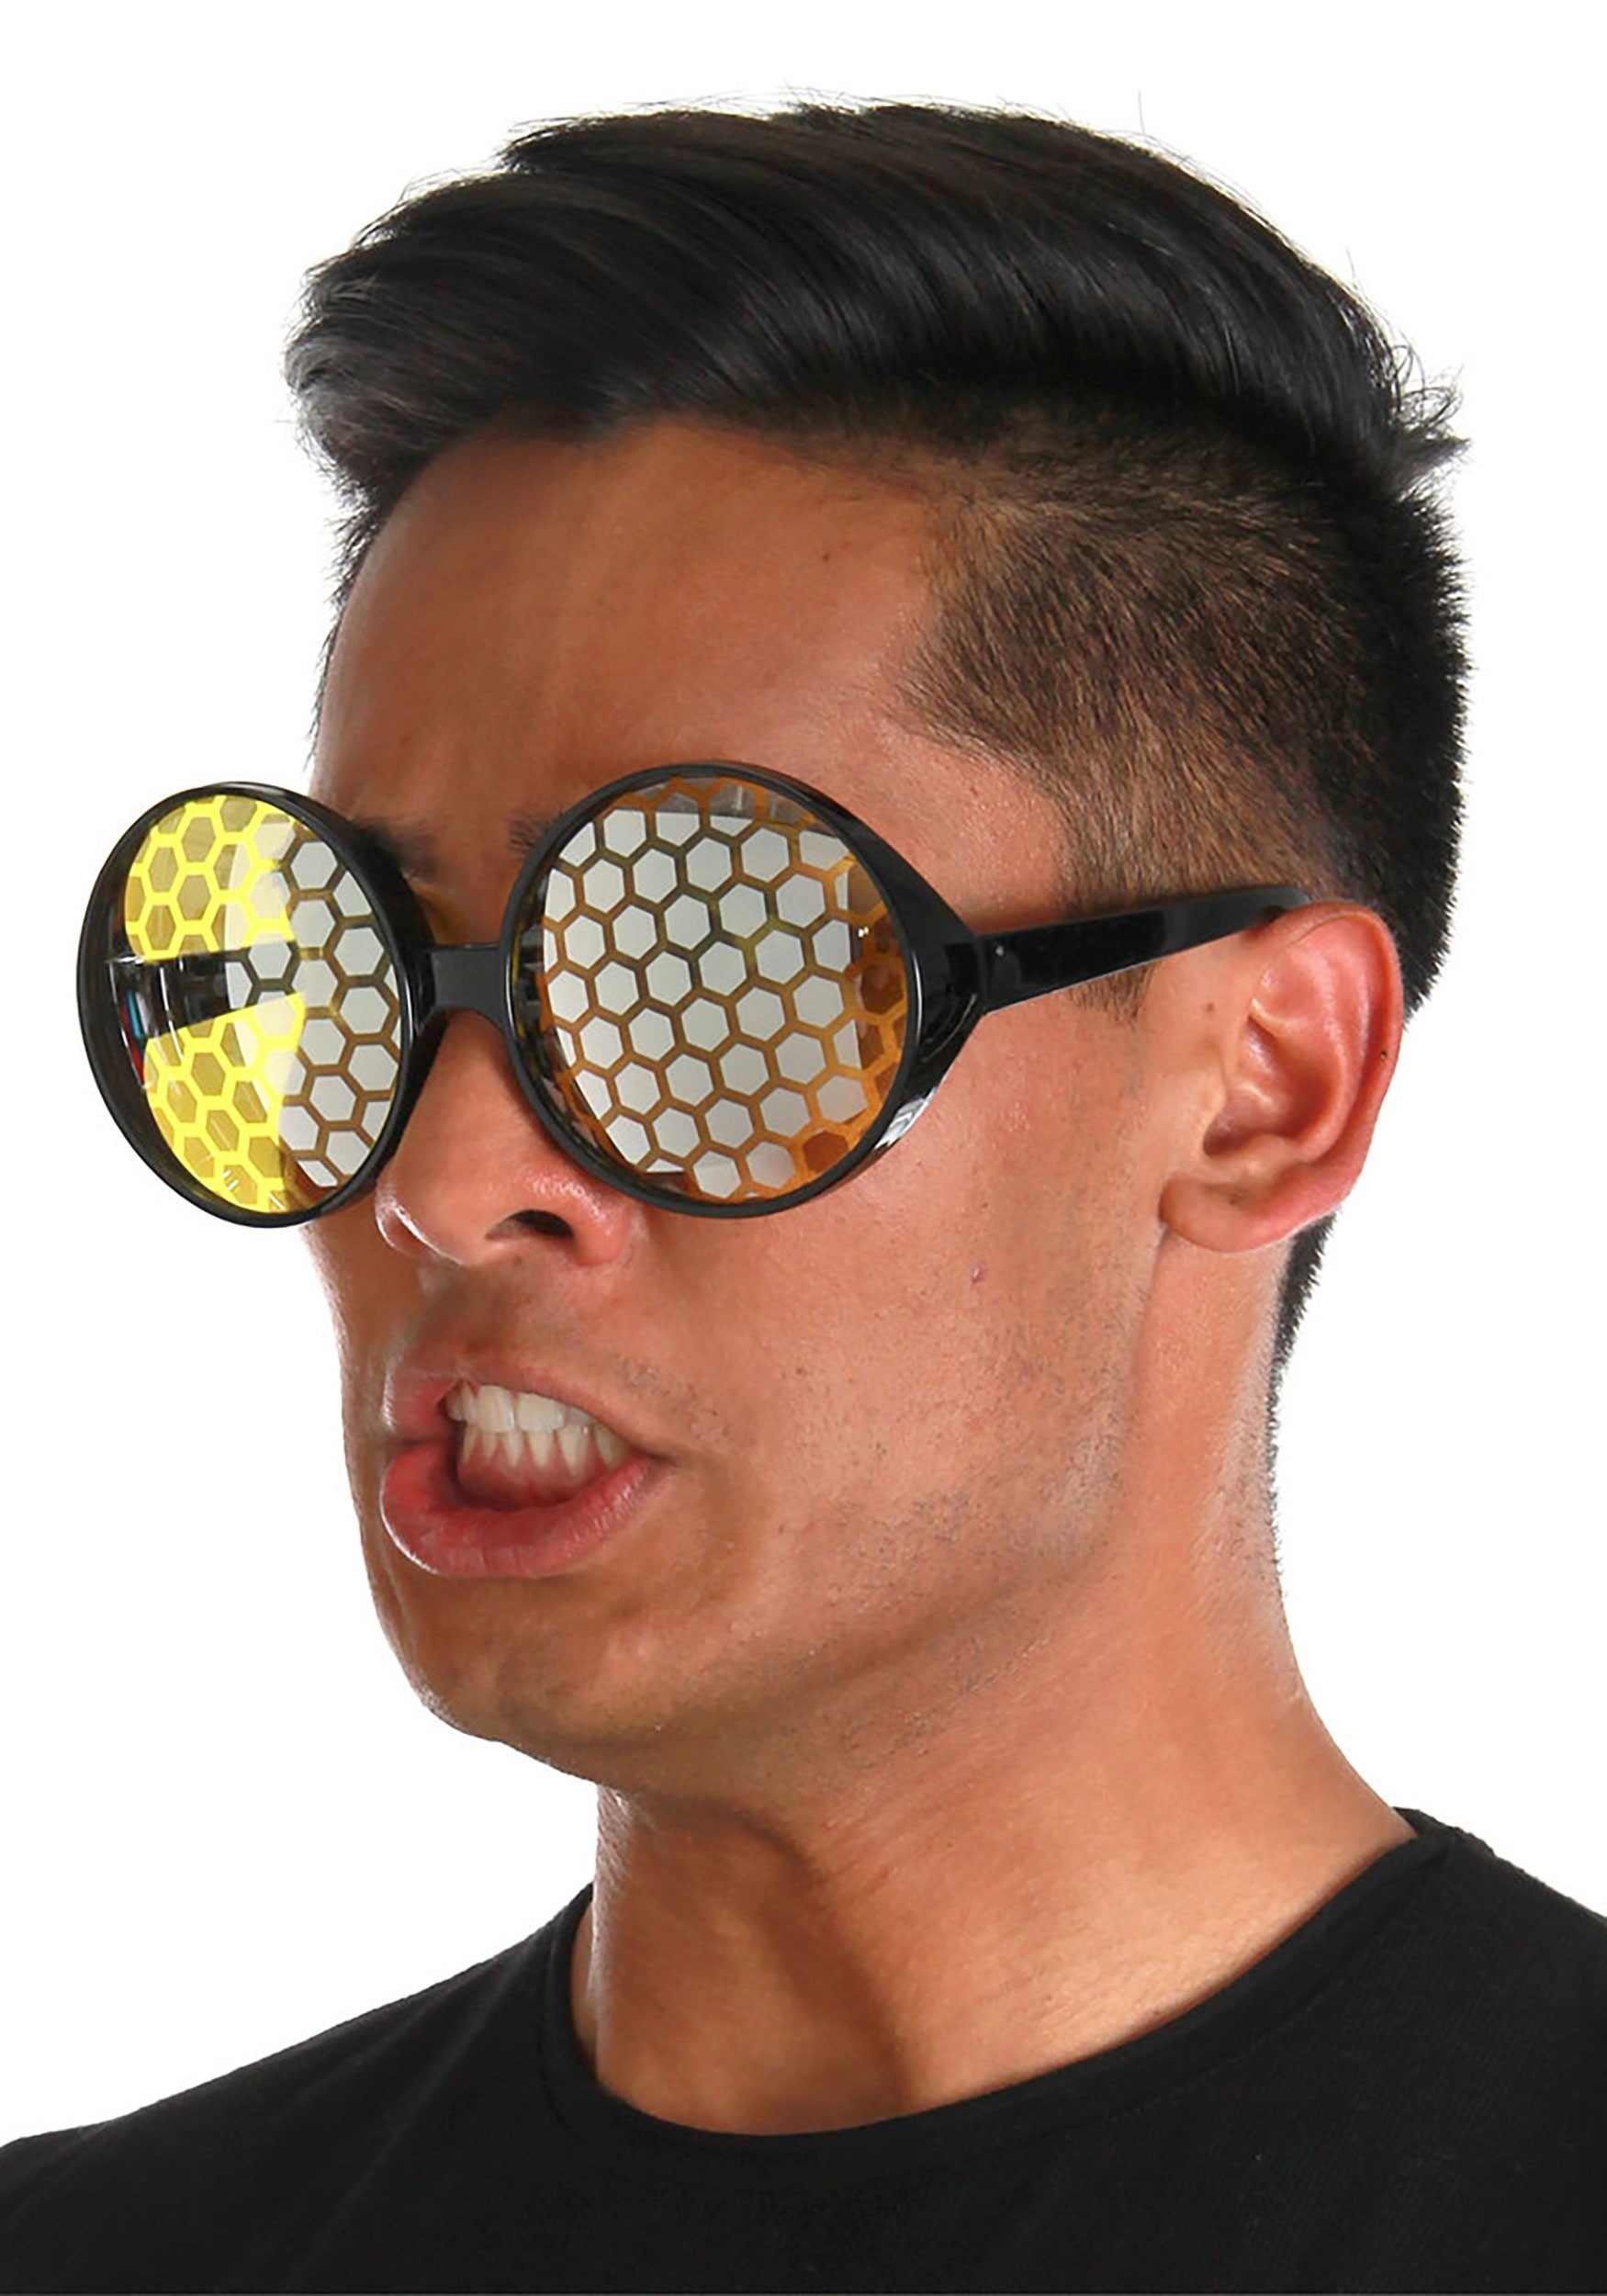 Black/Yellow Bug Eyes Glasses